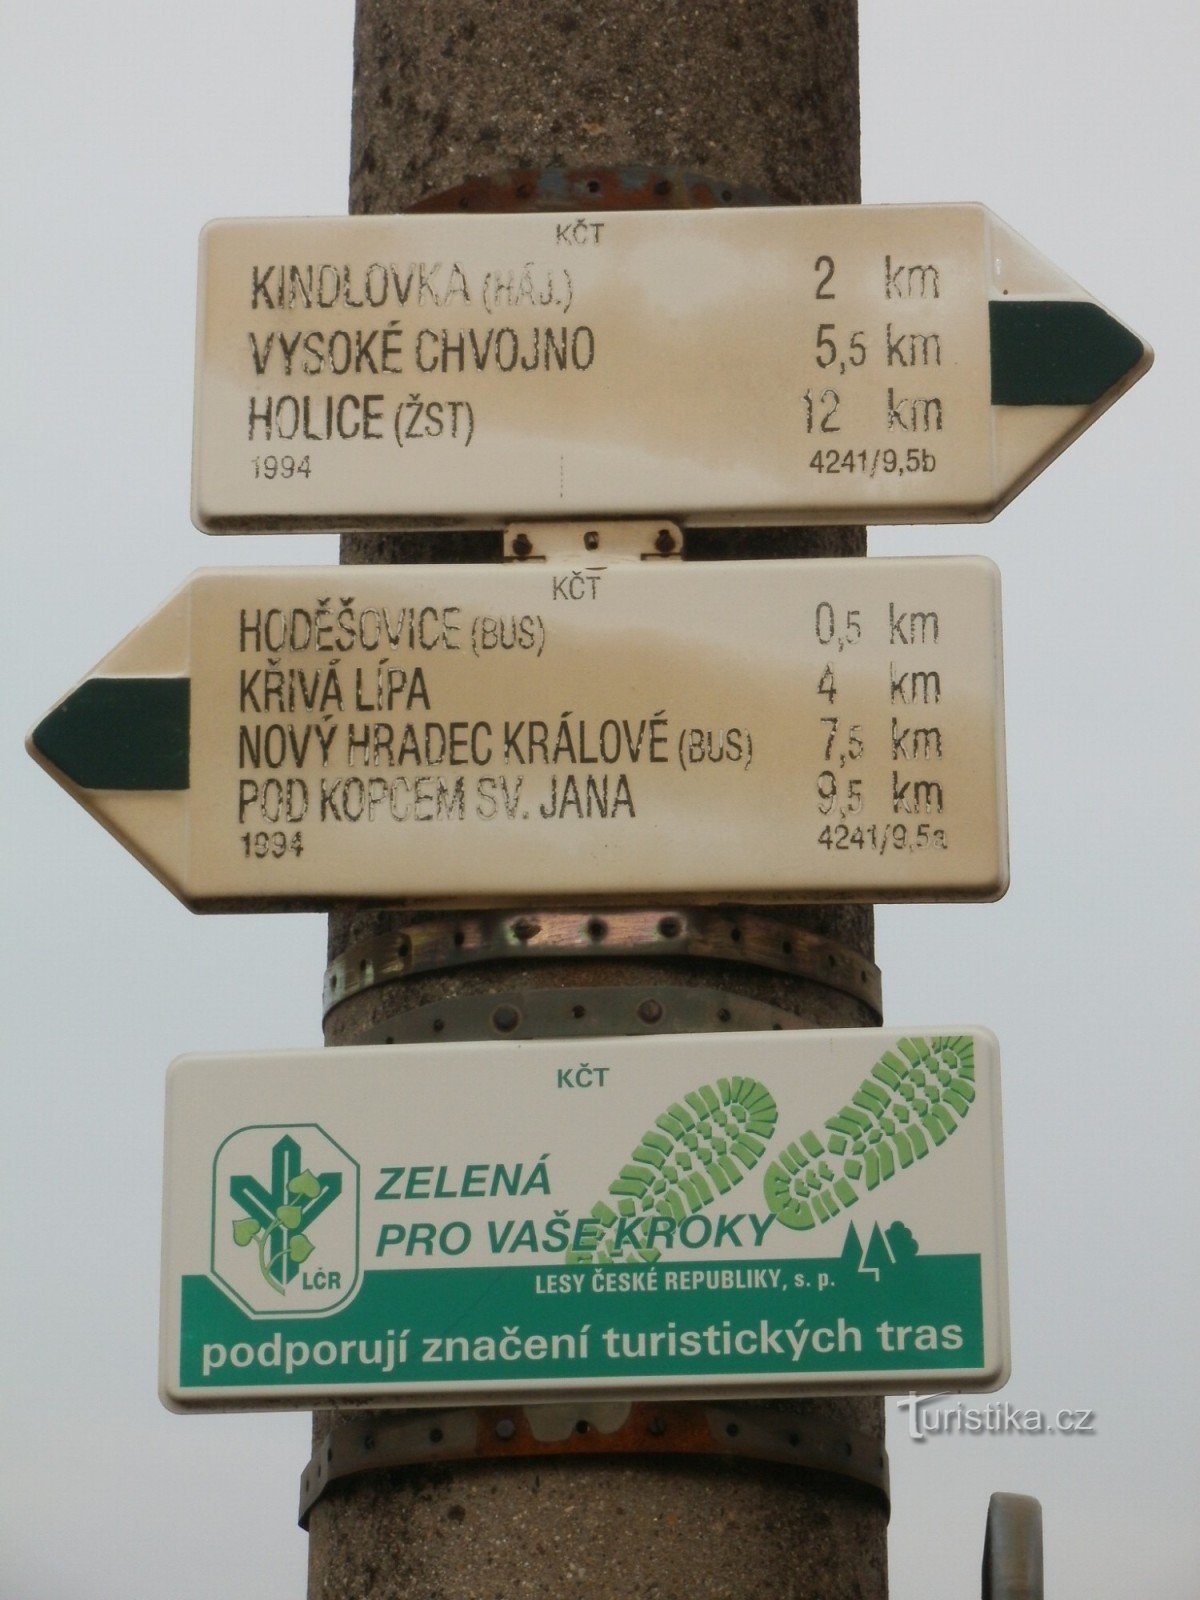 Туристический перекресток заповедника Ходешовка